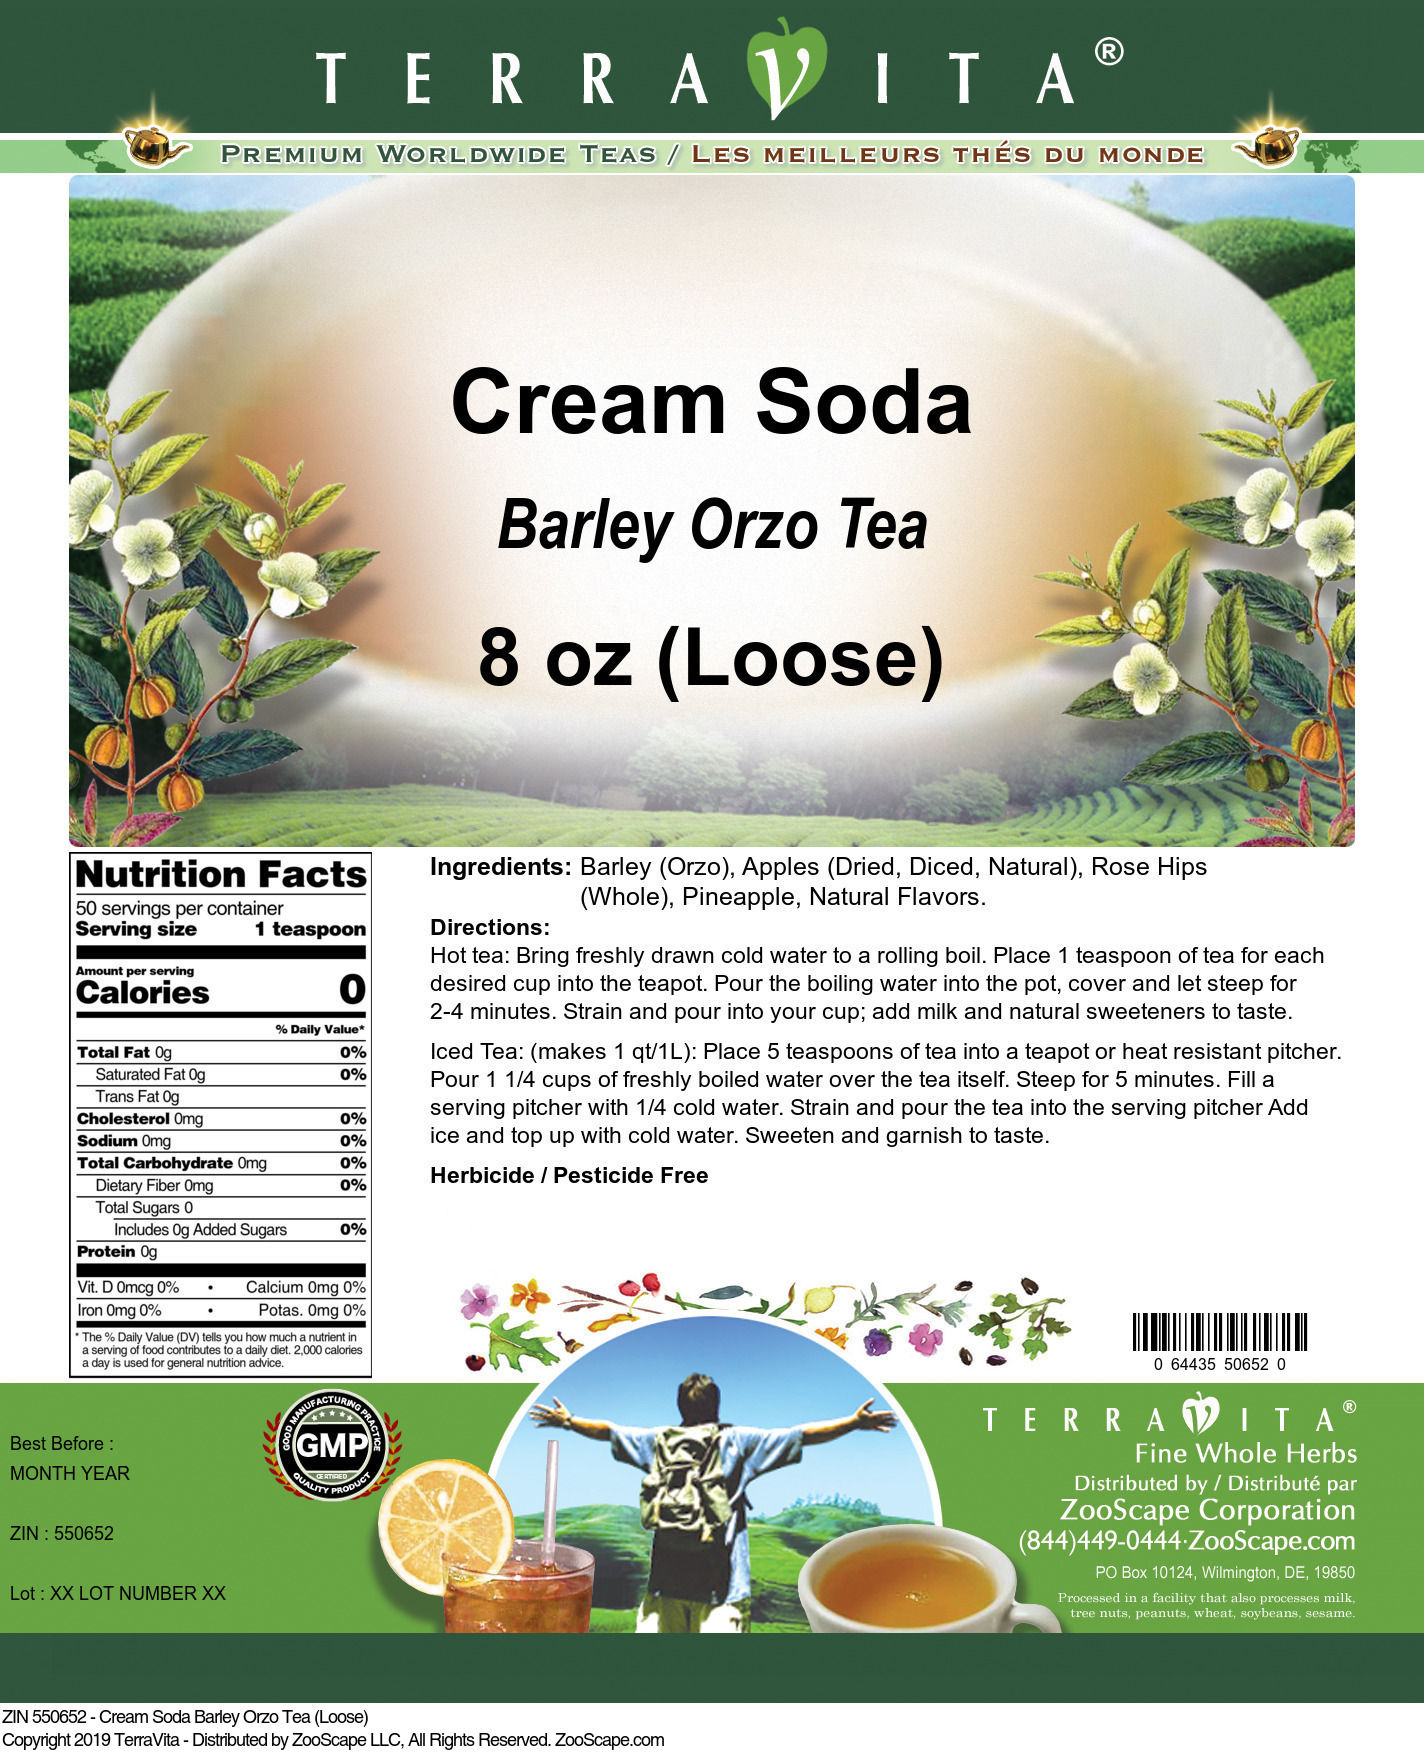 Cream Soda Barley Orzo Tea (Loose) - Label